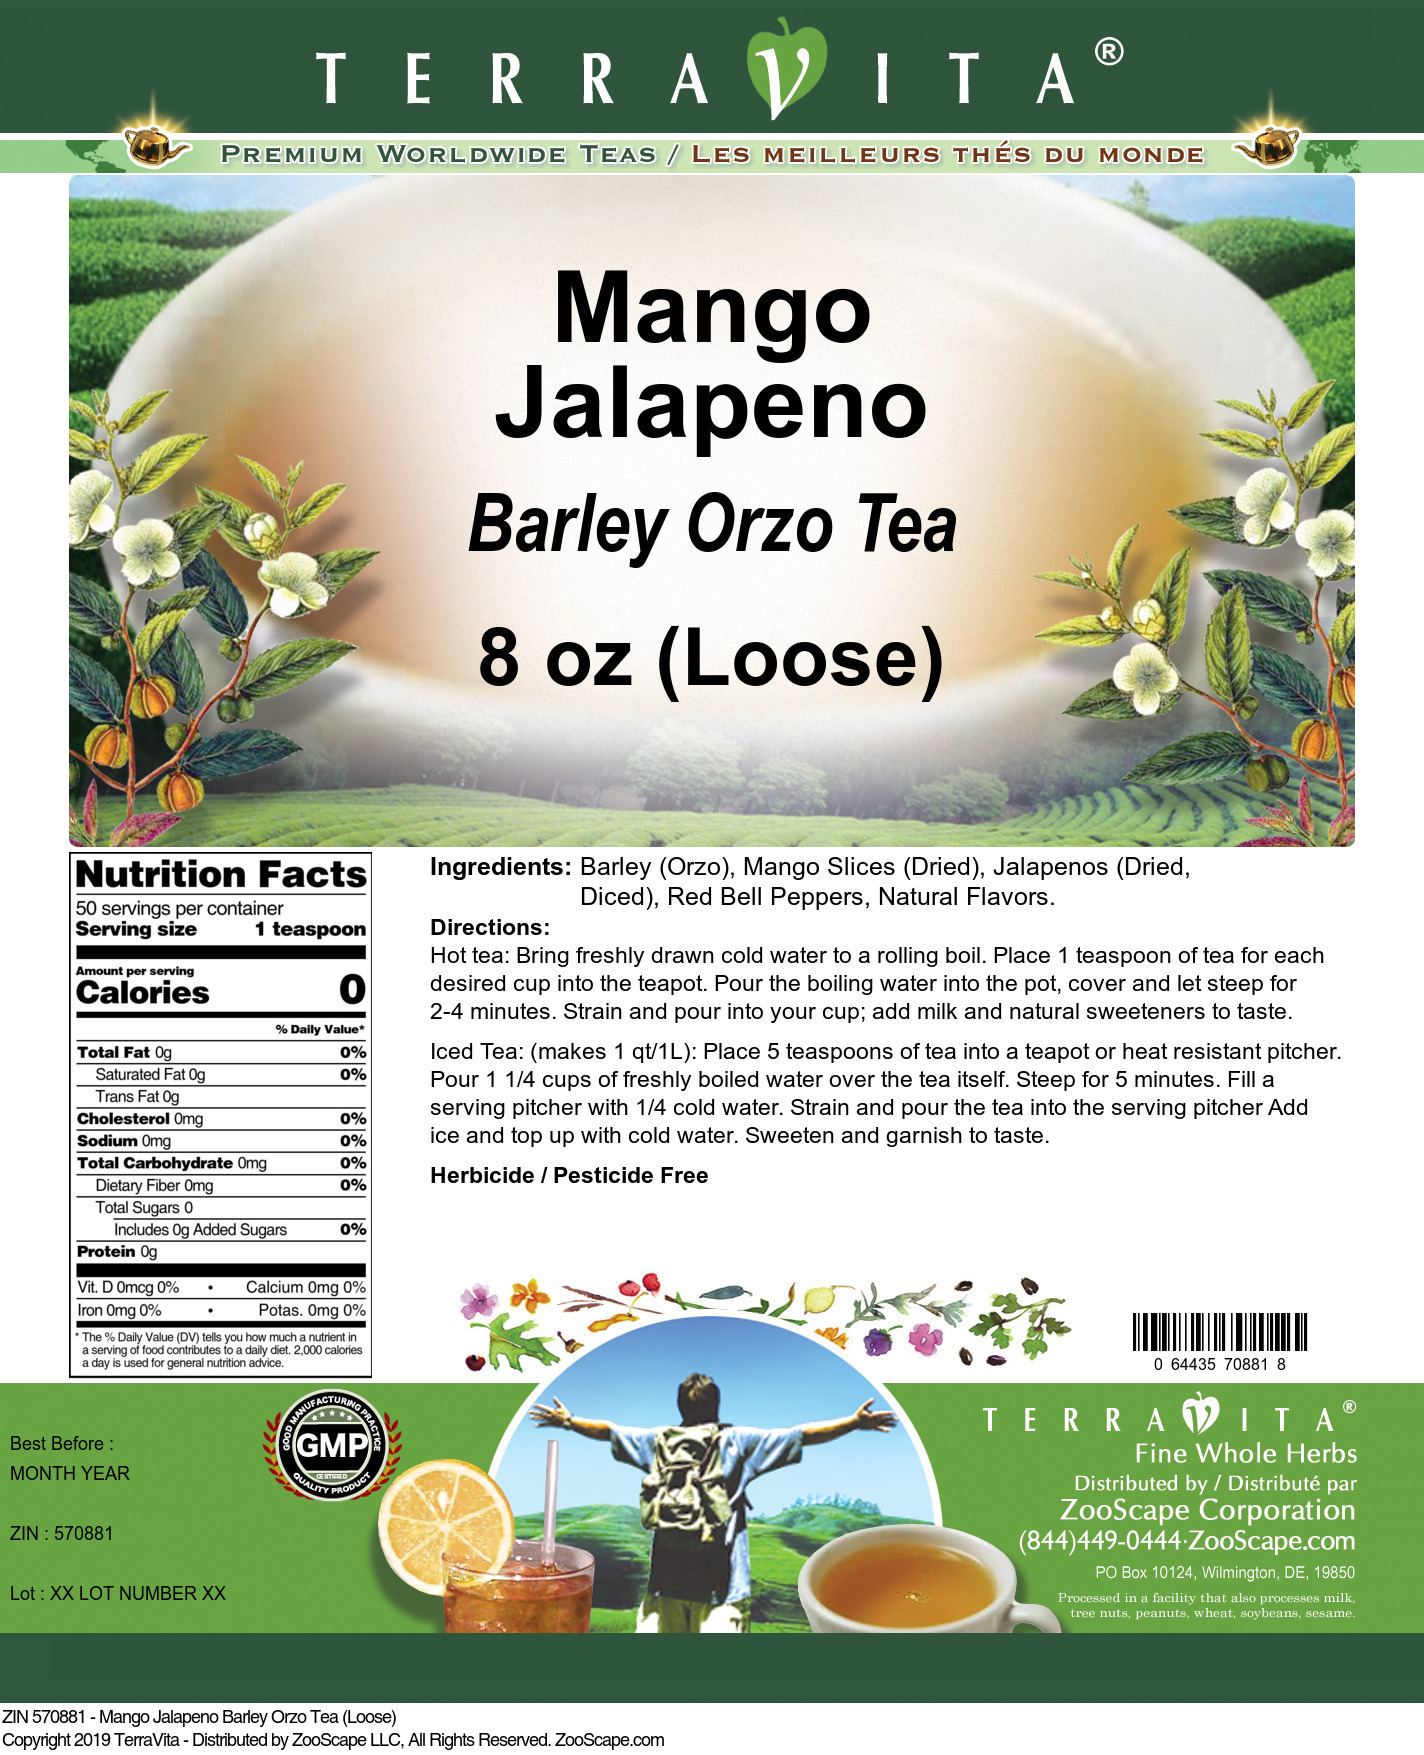 Mango Jalapeno Barley Orzo Tea (Loose) - Label